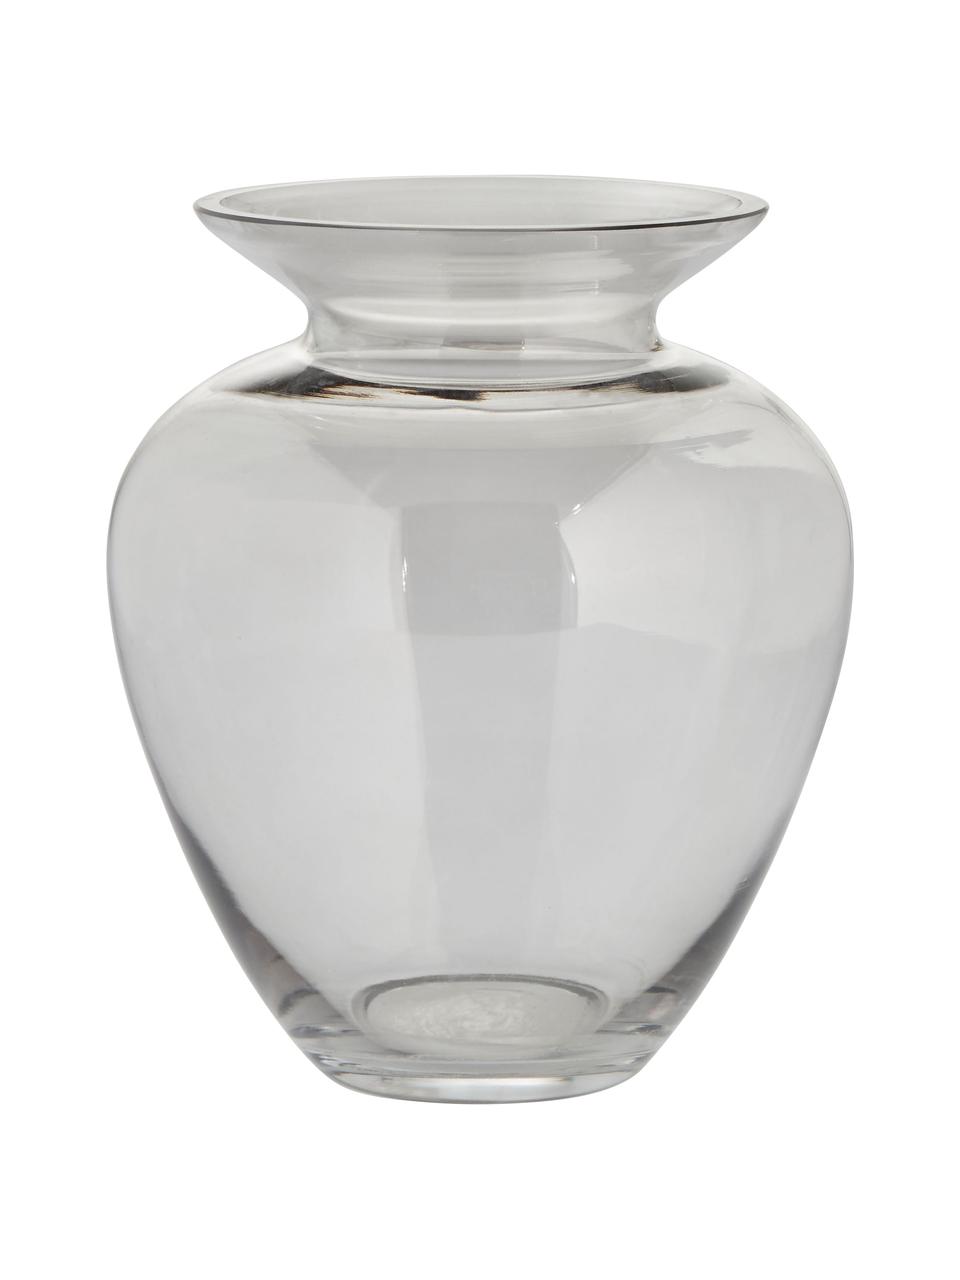 Vaso in vetro soffiato Milia, Vetro, Grigio trasparente, Ø 18 cm